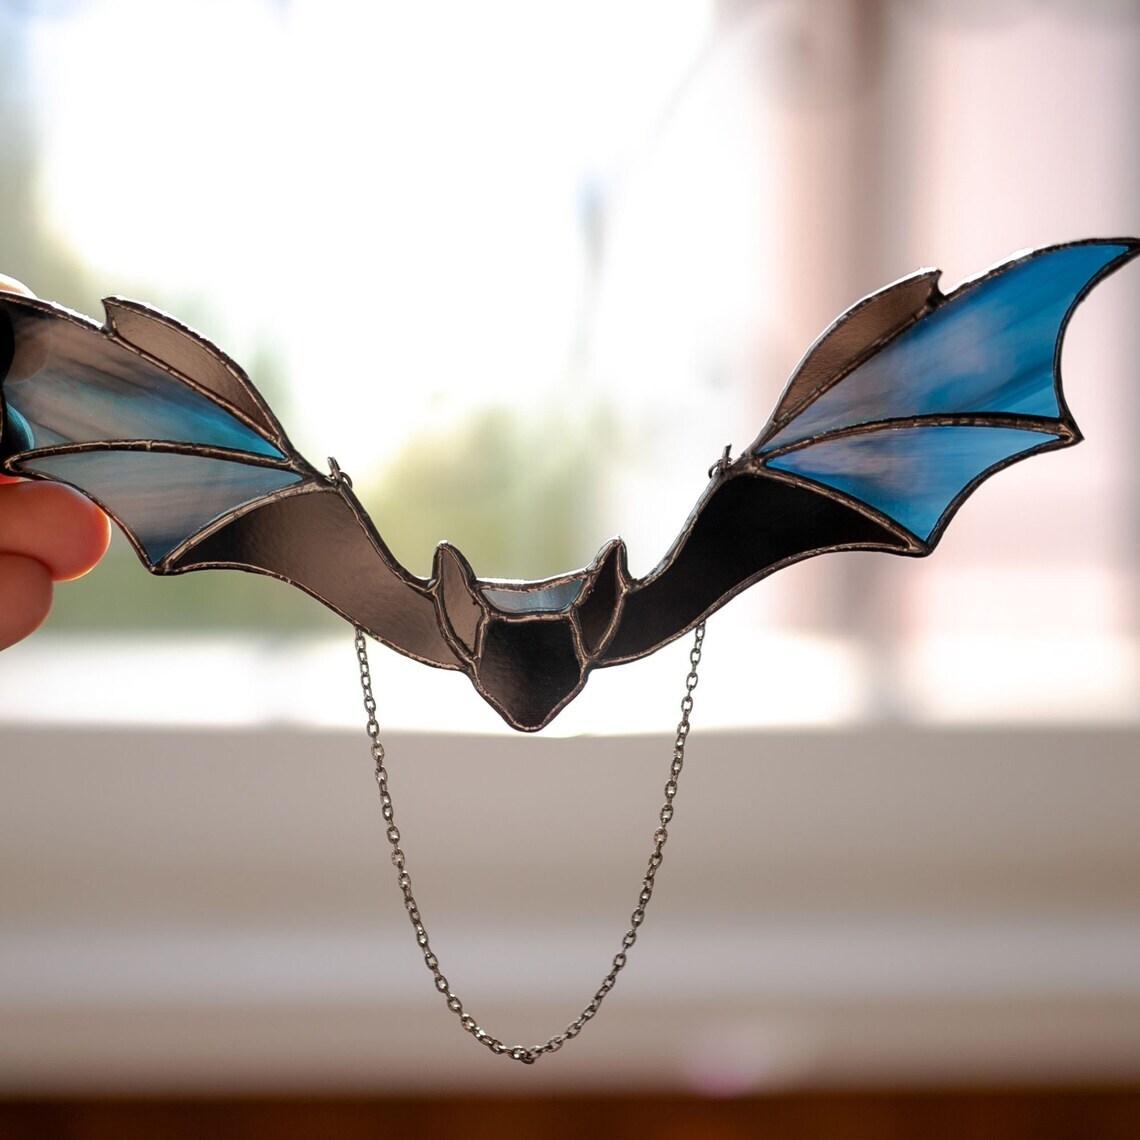 Bat decor Halloween